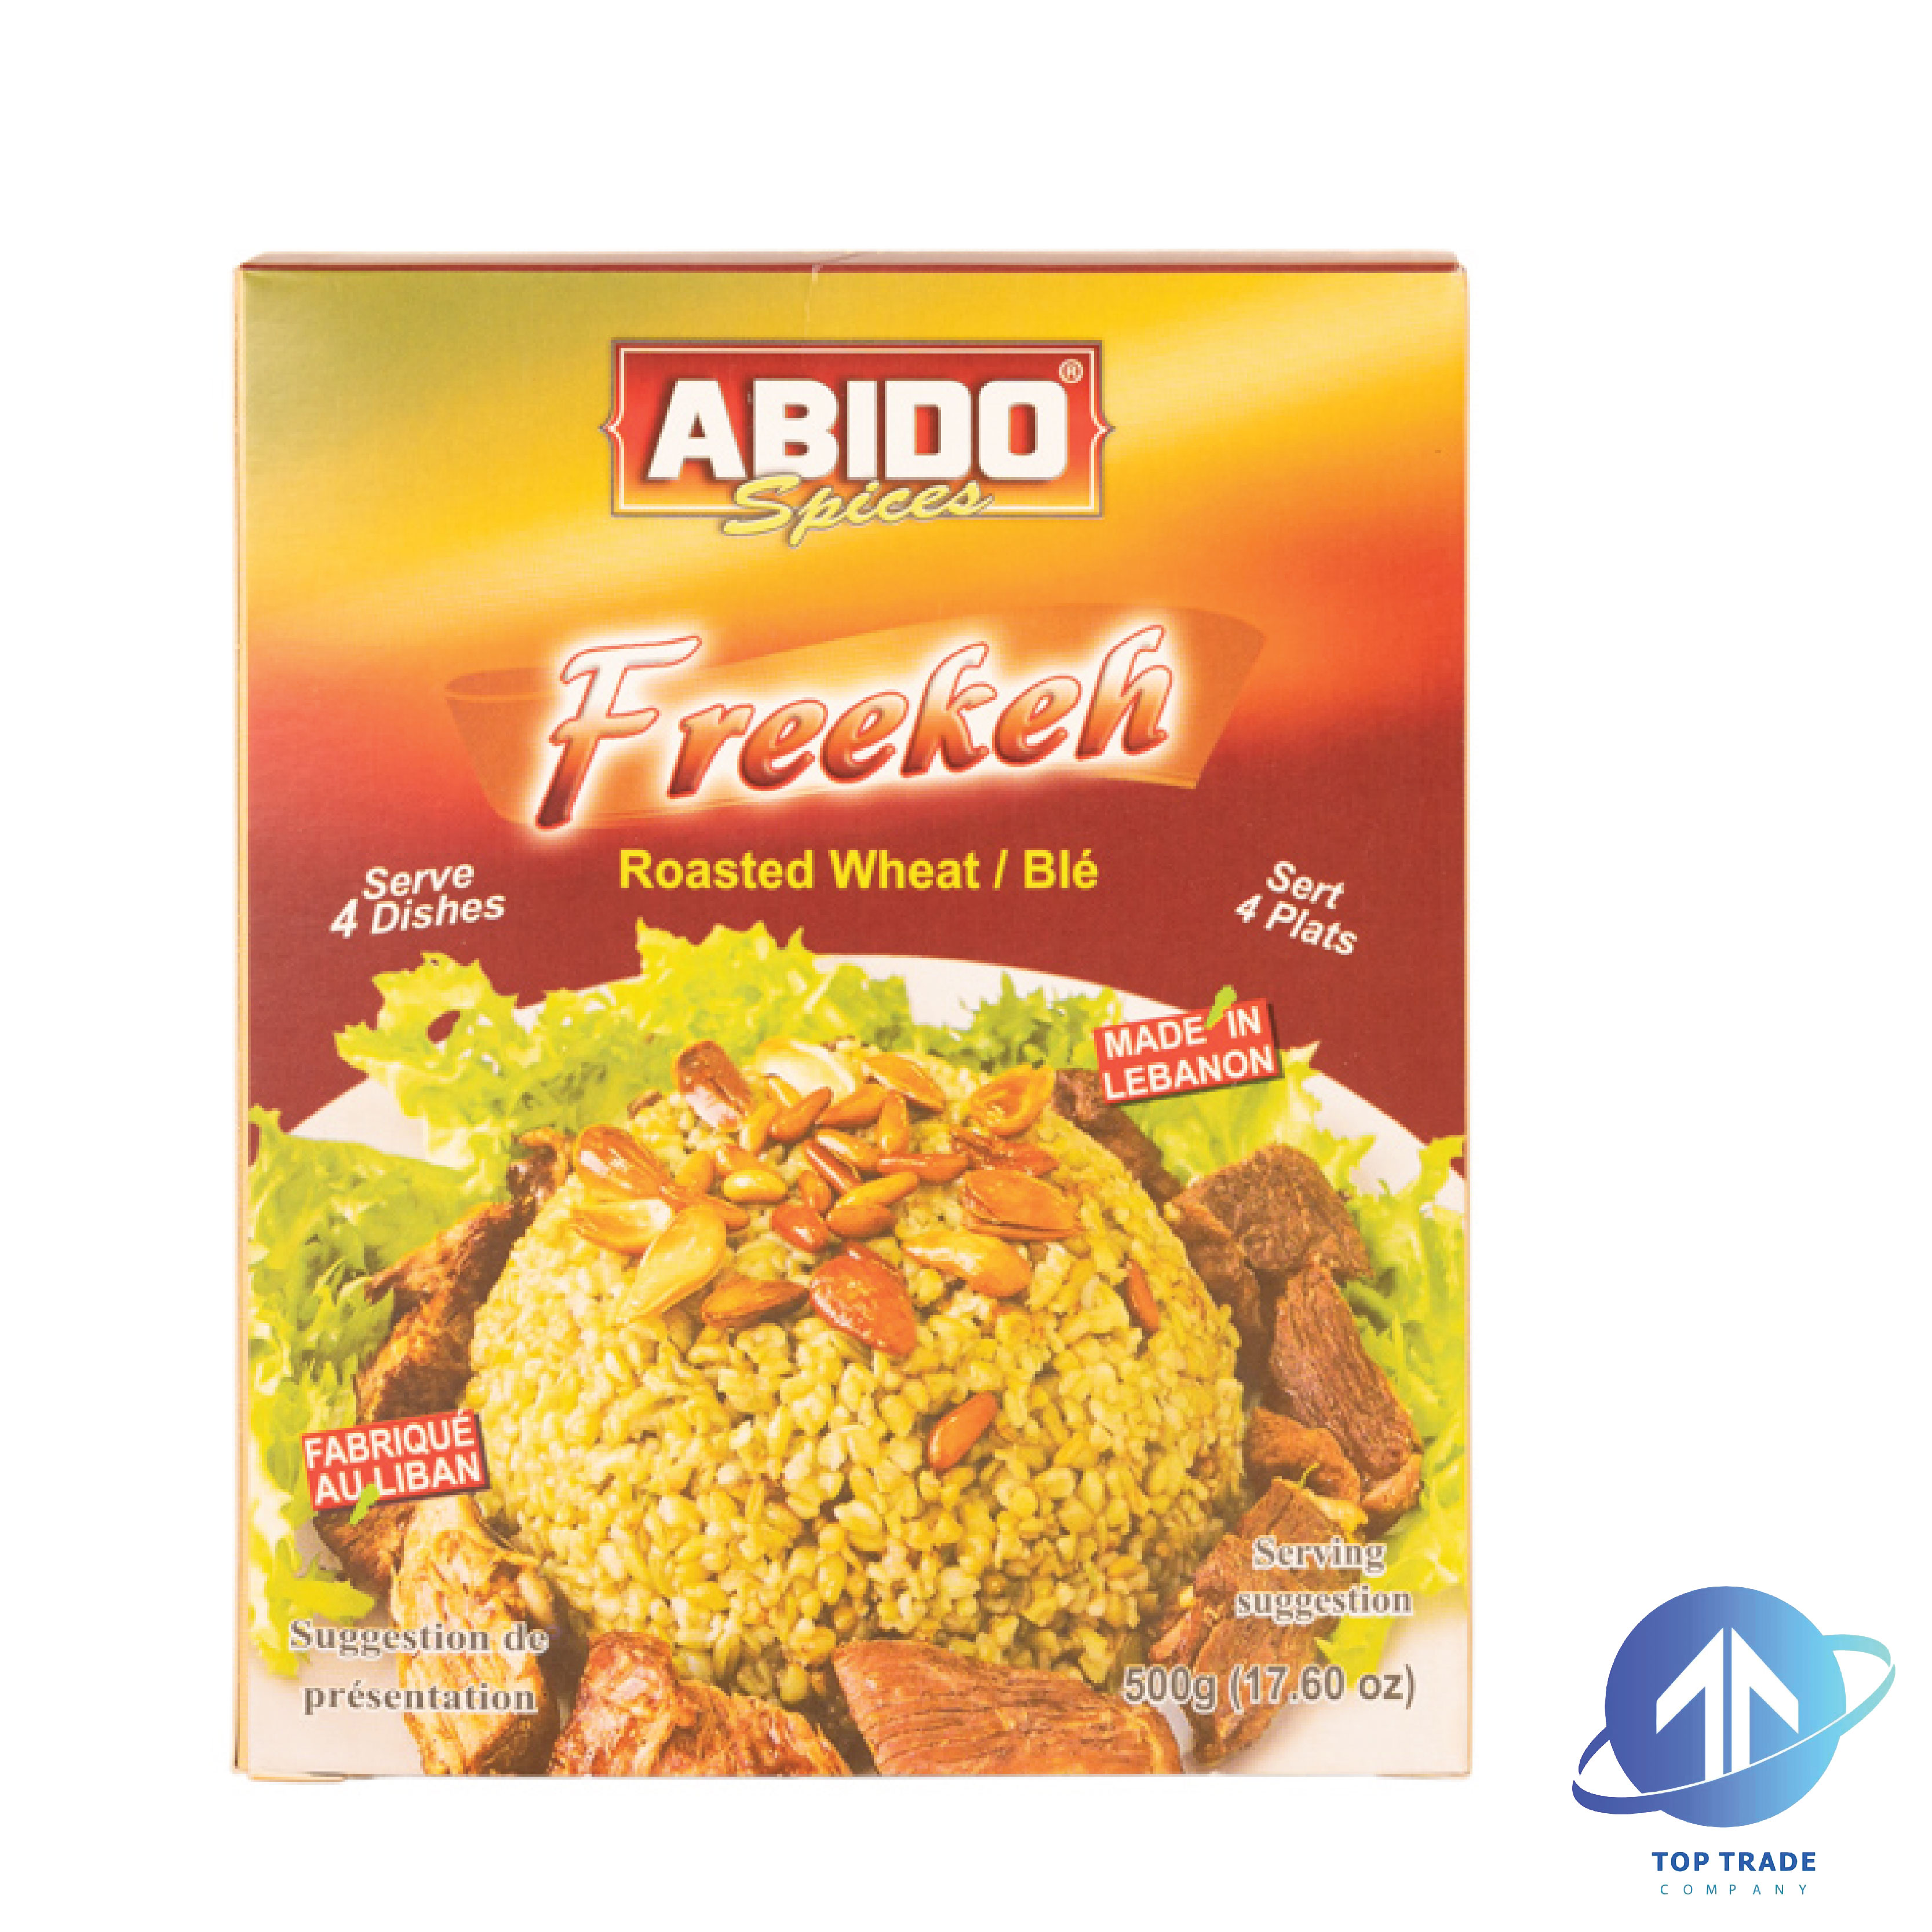 Abido Mixed Grilled Wheat (Freekeh) 500gr